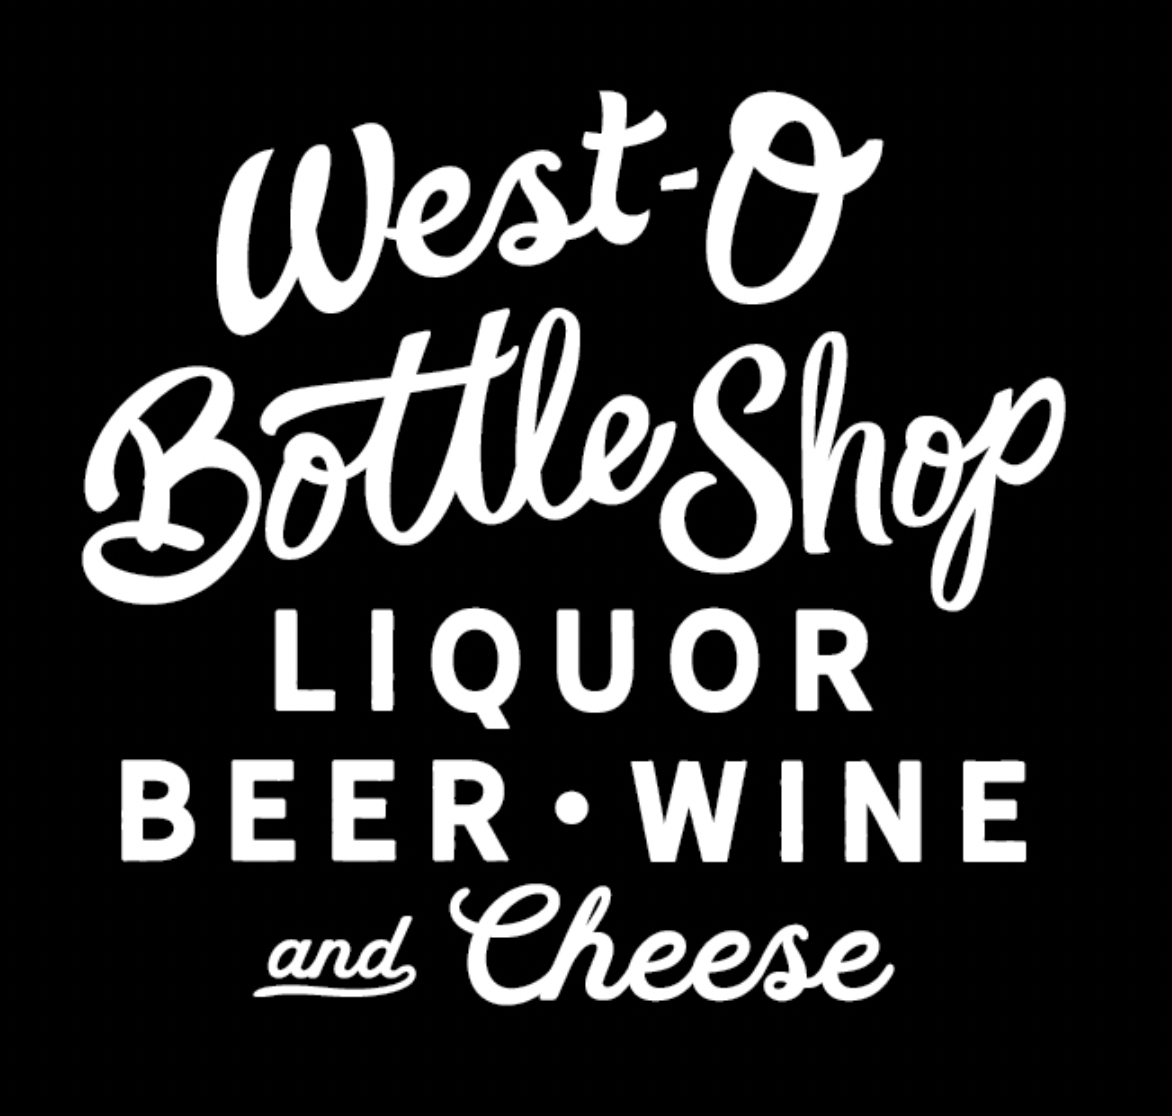 West-O Bottle Shop